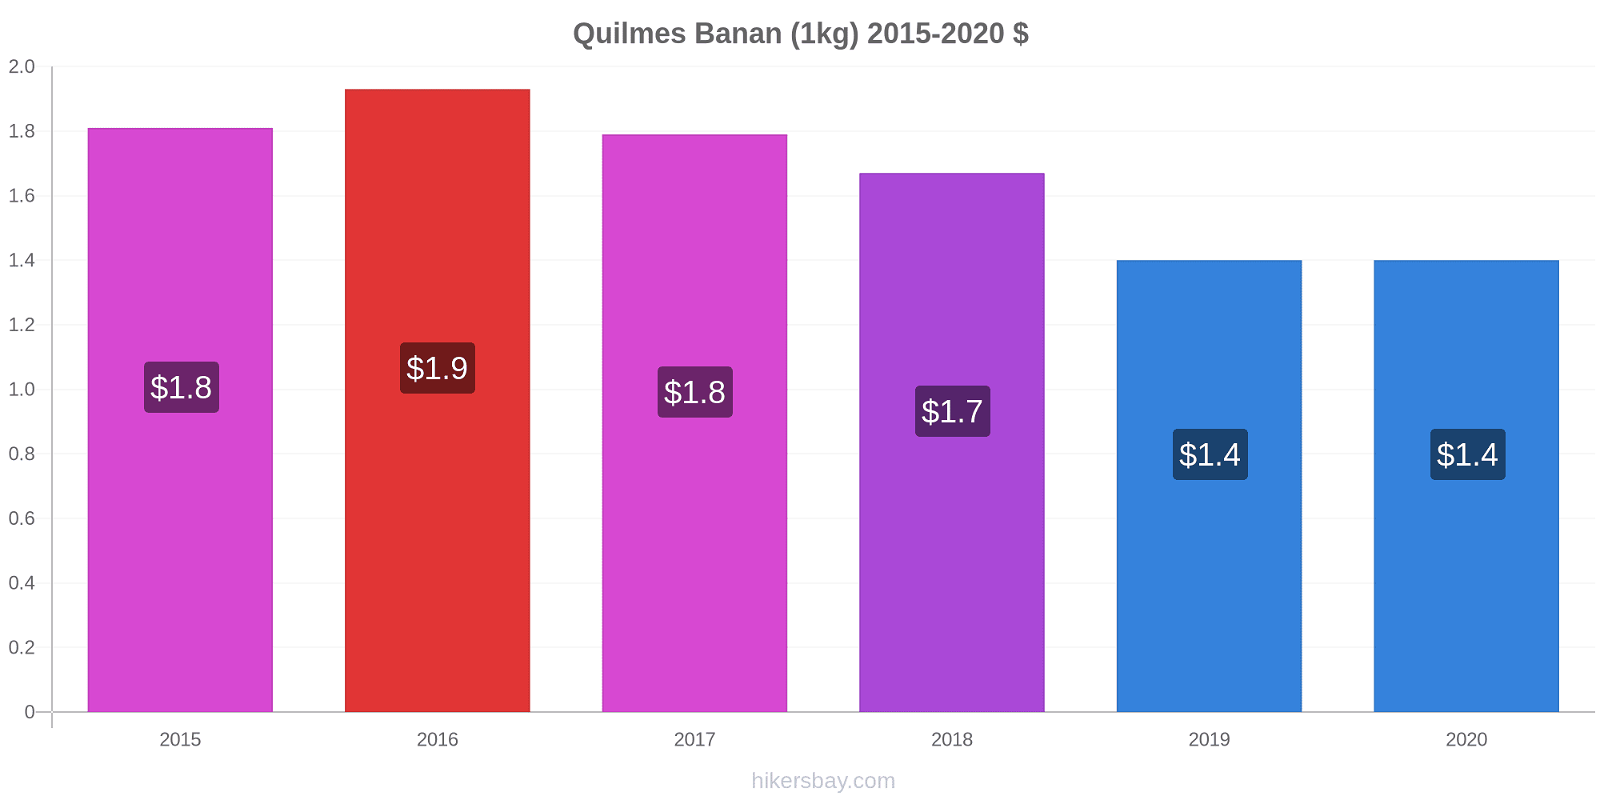 Quilmes prisendringer Banan (1kg) hikersbay.com